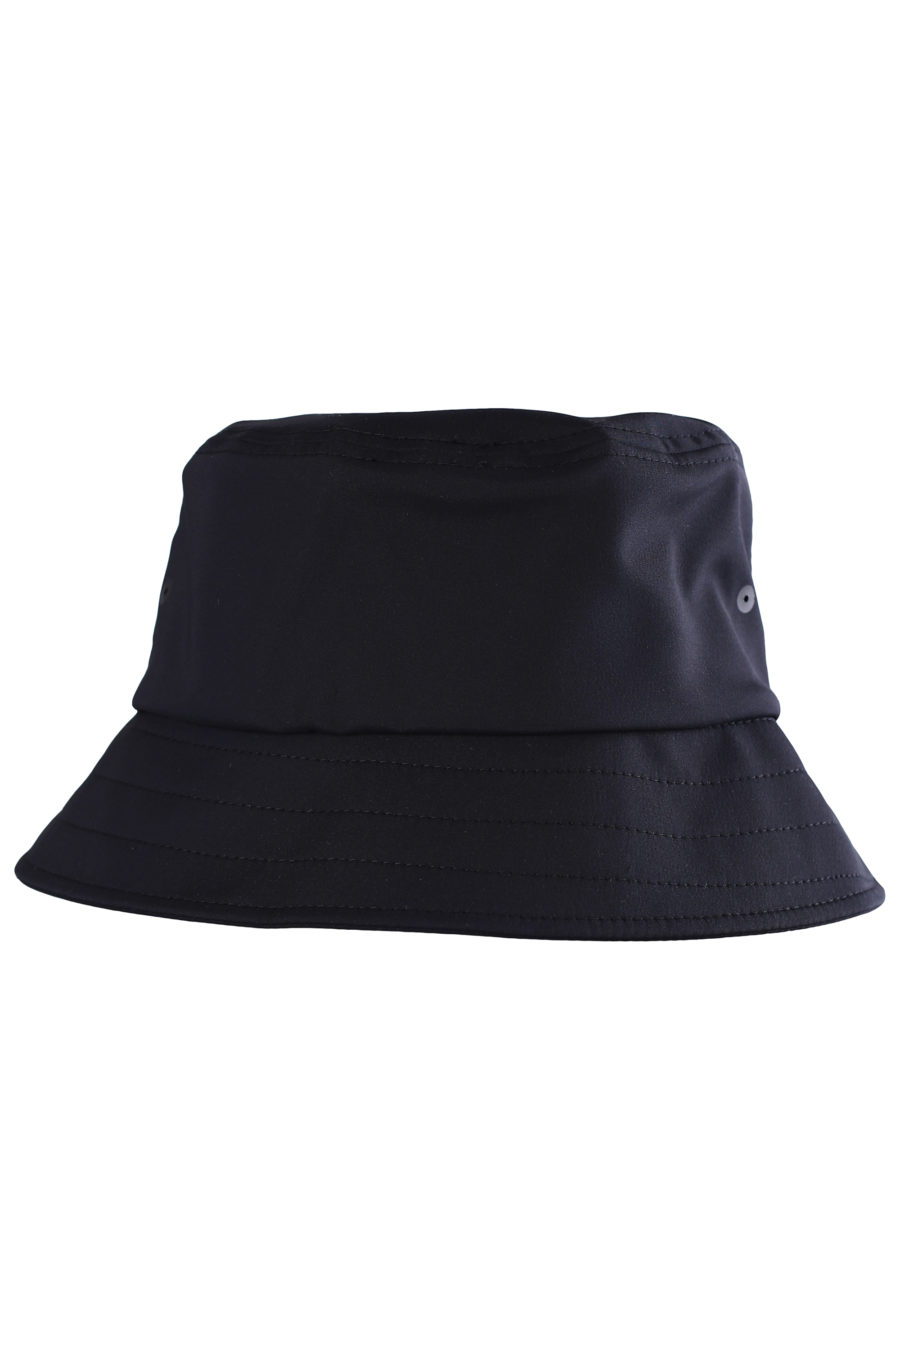 Sombrero de pescador negro con logotipo engomado "Karl" - IMG 0641